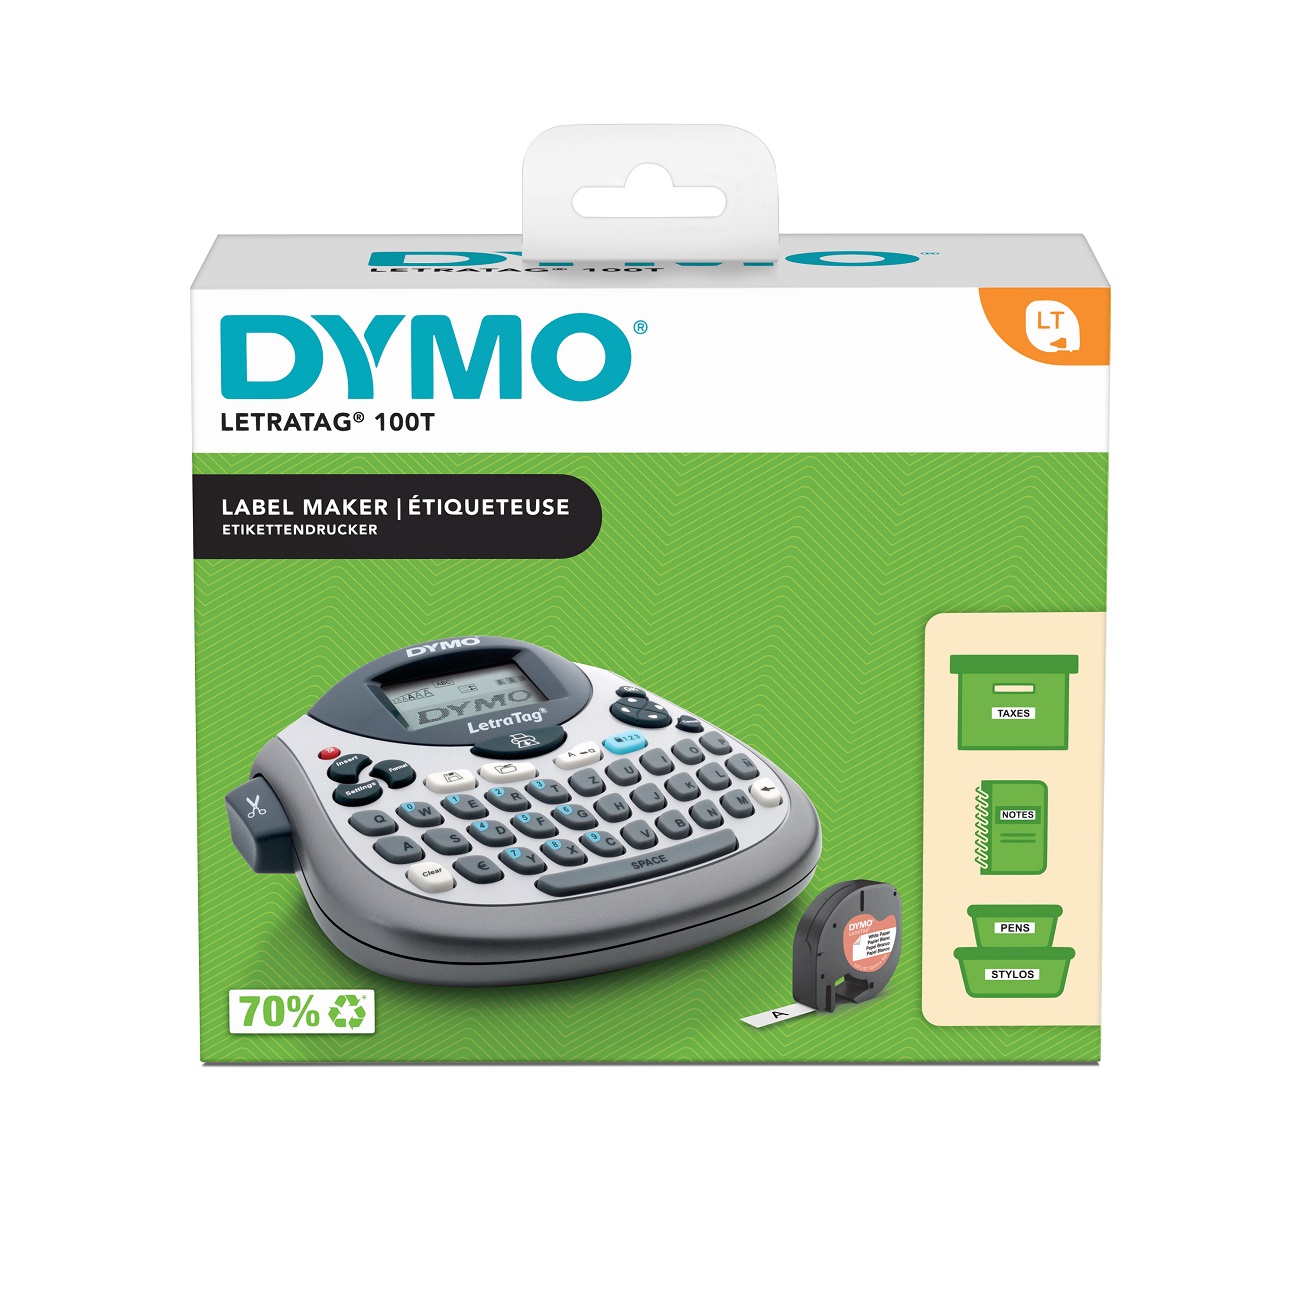 DYMO LetraTag LT-100T Tischgerät QWERTZ-Tastatur - 2174591